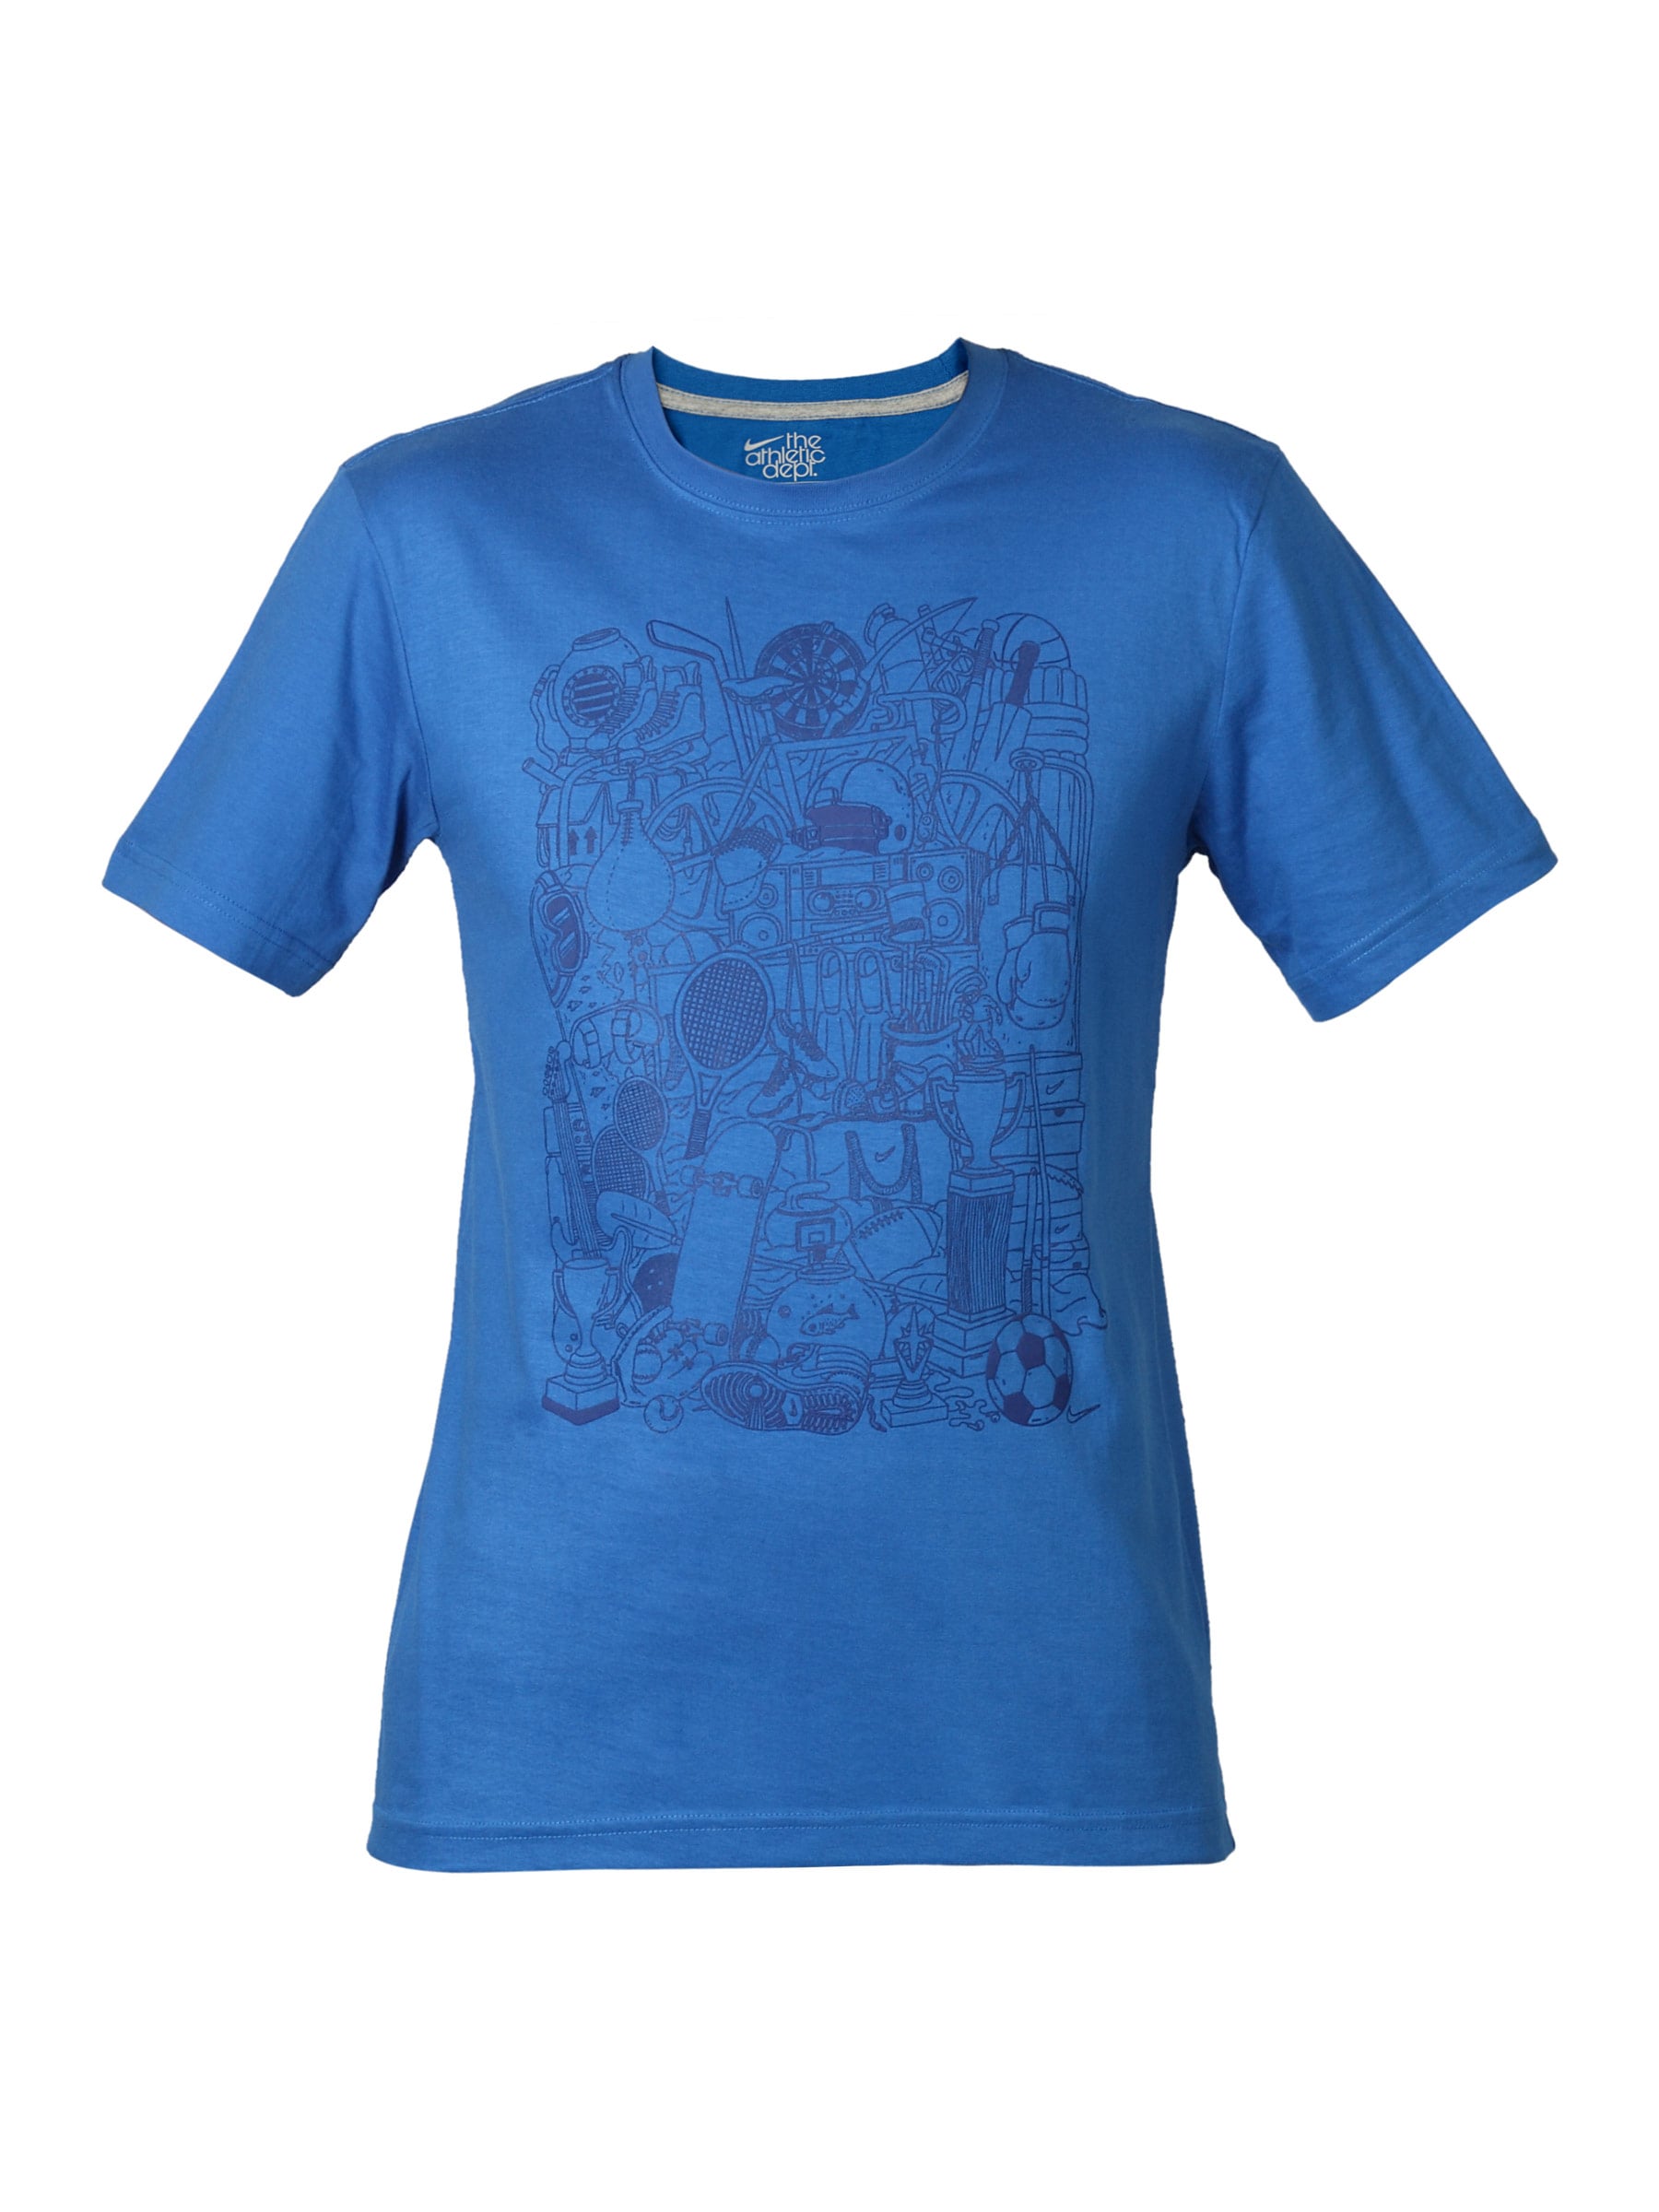 Nike Men Printed Blue T-shirt